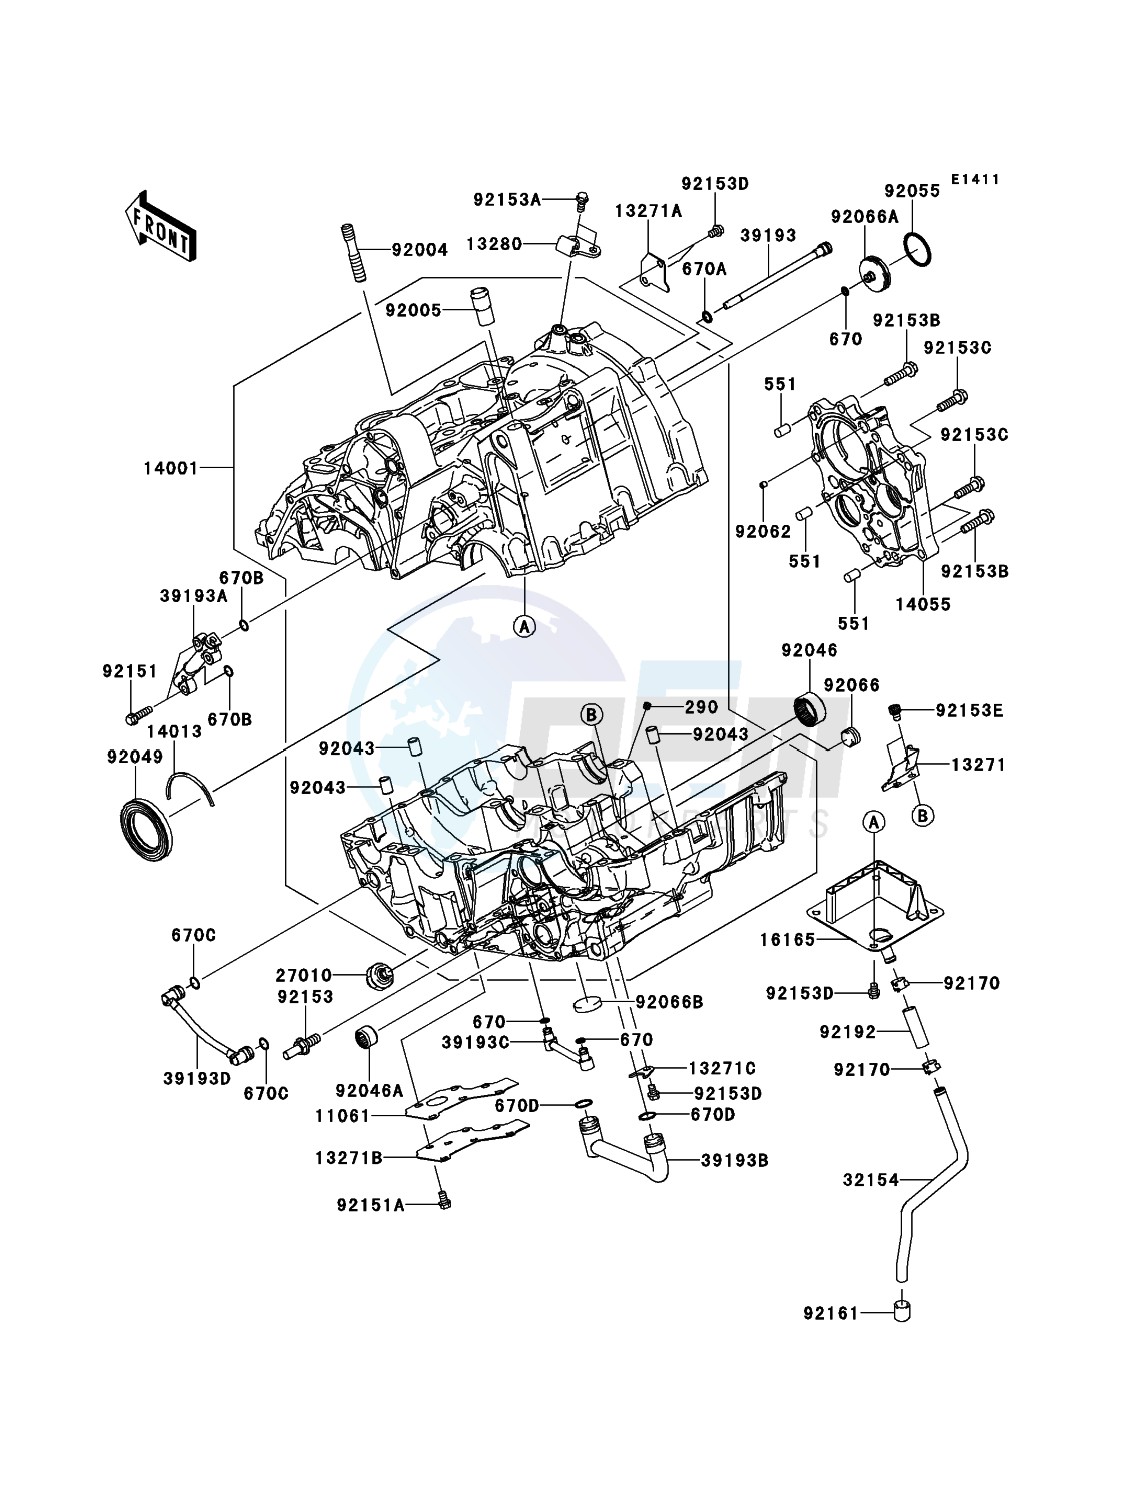 Crankcase(-ER650AE057323) blueprint